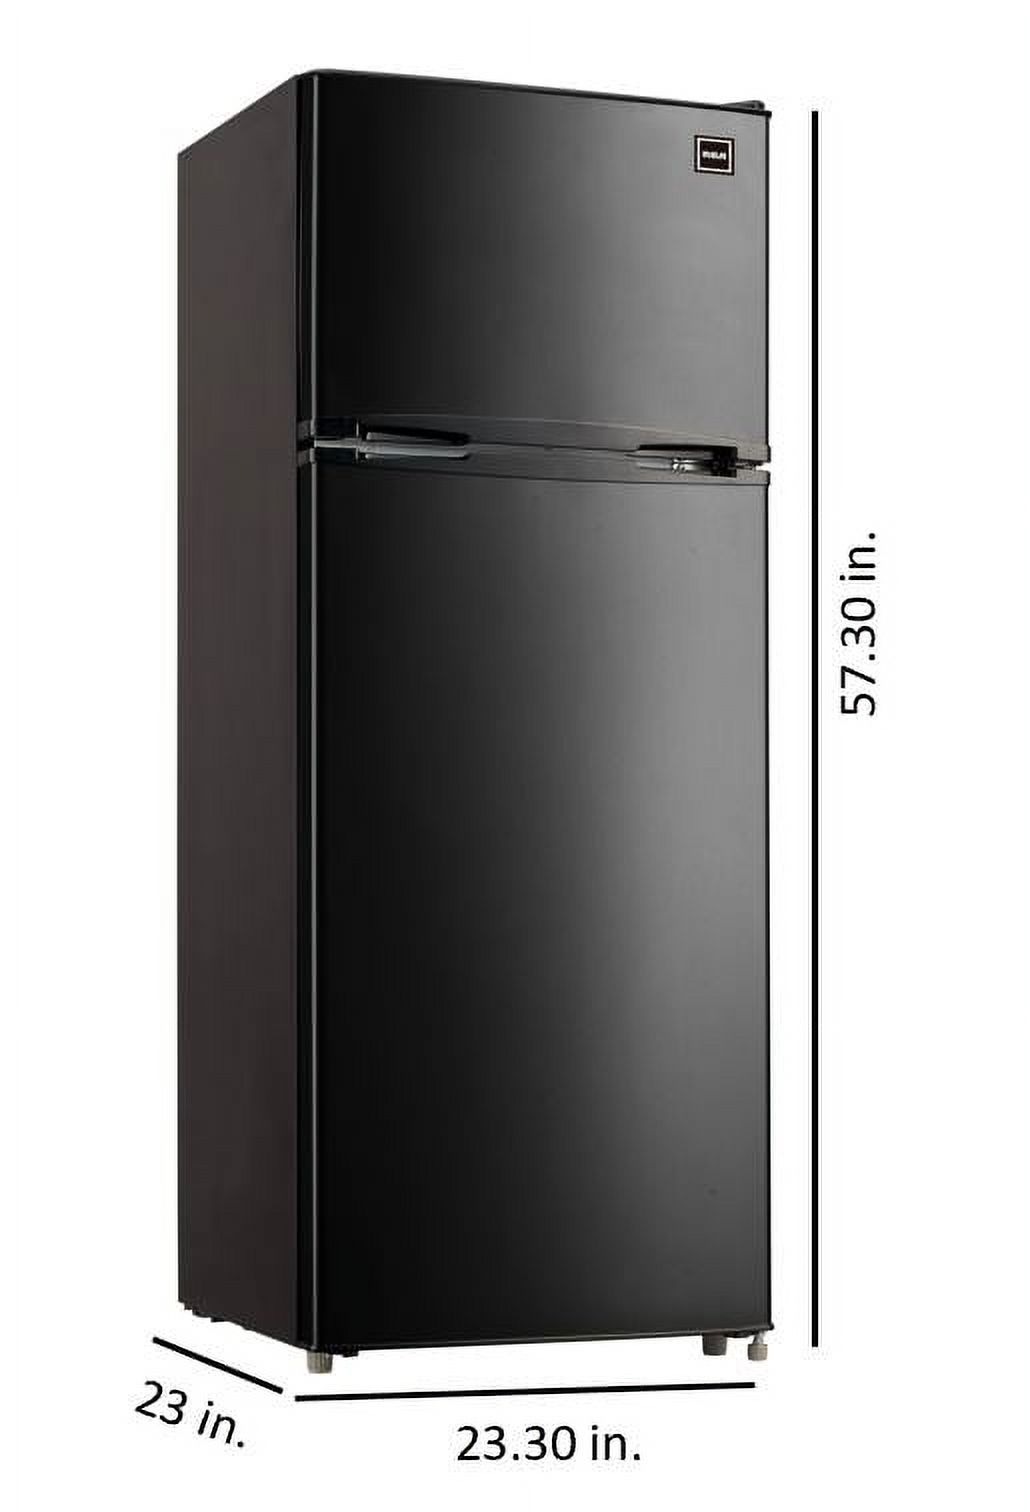 RCA 7.5 Cu. Ft. Top Freezer Refrigerator, RFR741 (Black) - image 2 of 3